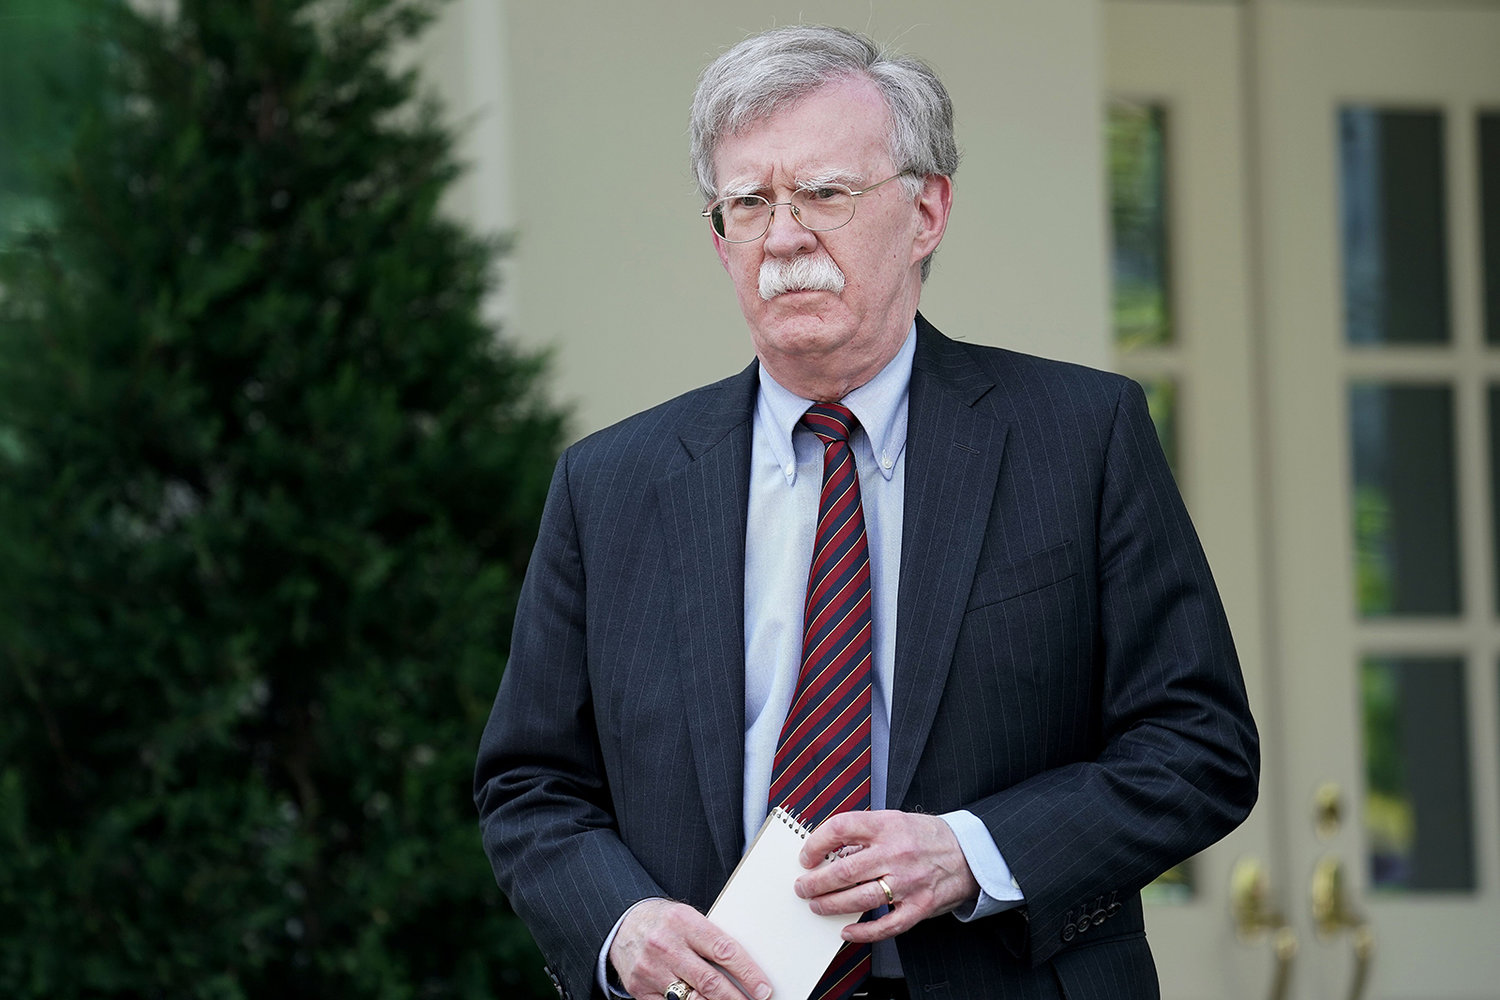 Former White House national security adviser John Bolton in 2019. (Chip Somodevilla/Getty Images/TNS)